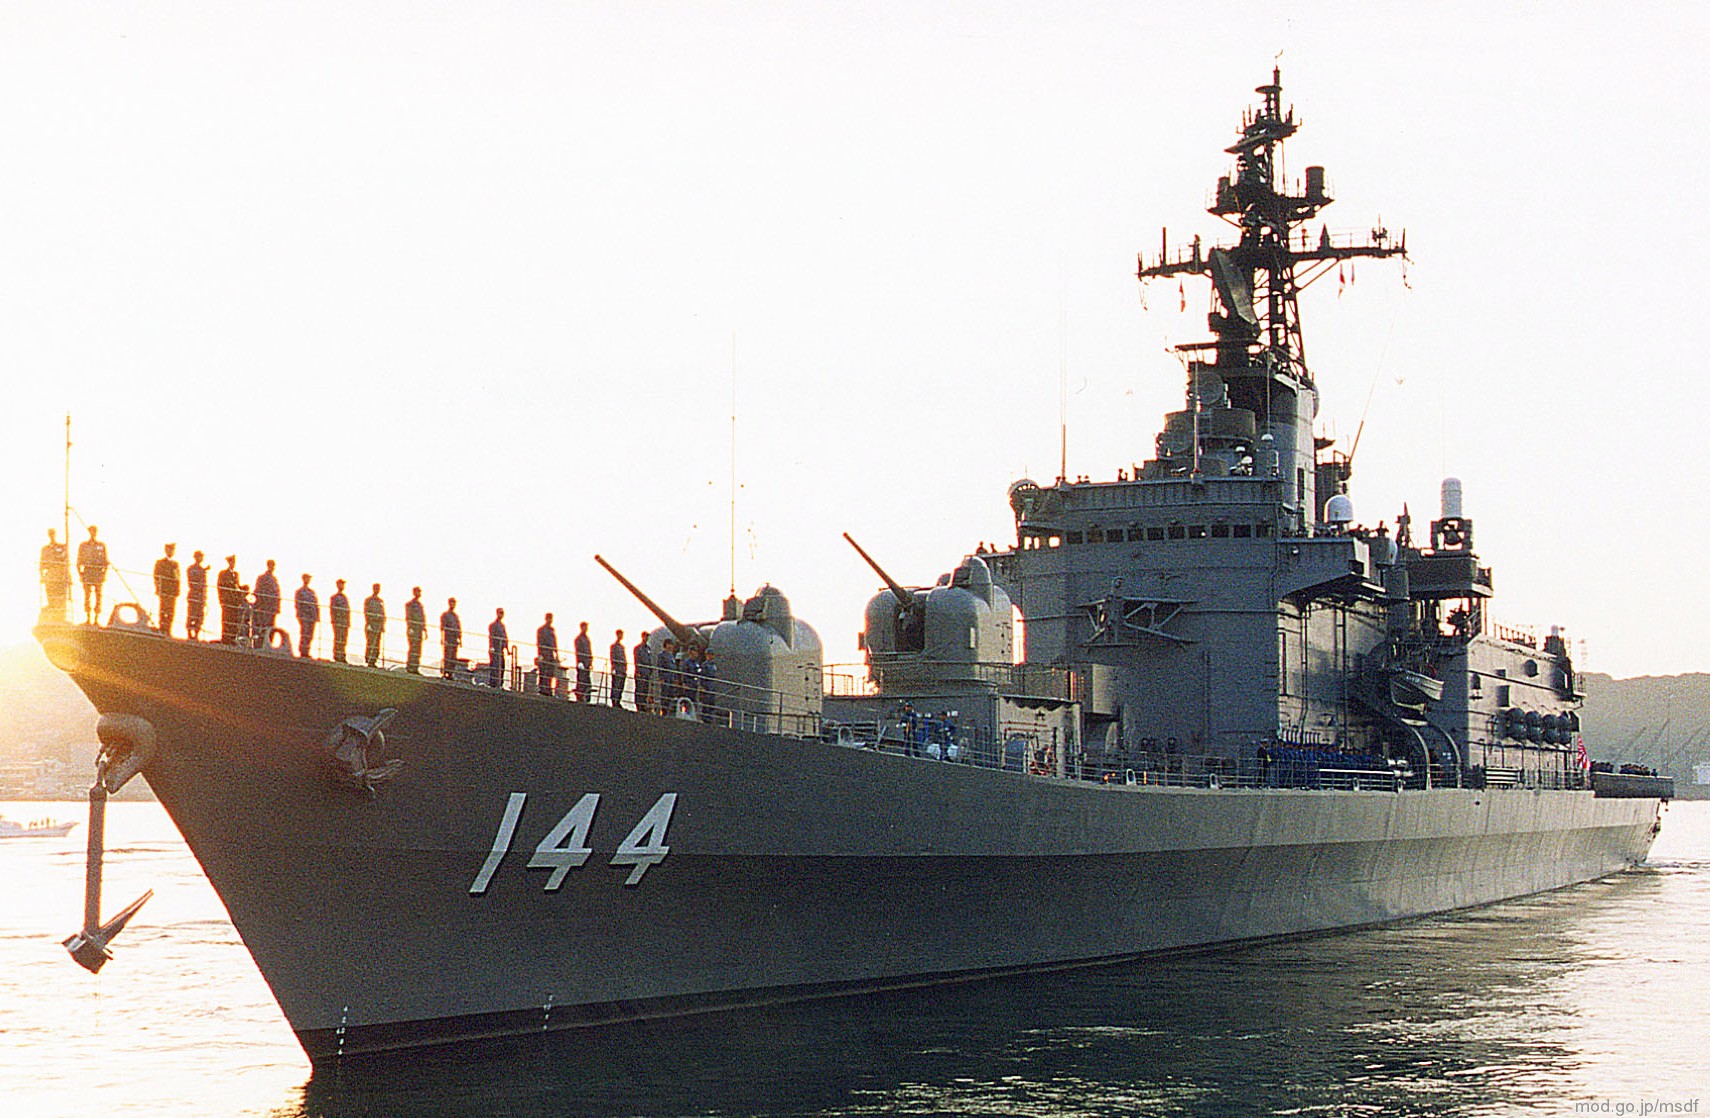 ddh-144 jds kurama shirane class helicopter destroyer japan maritime self defense force jmsdf 04